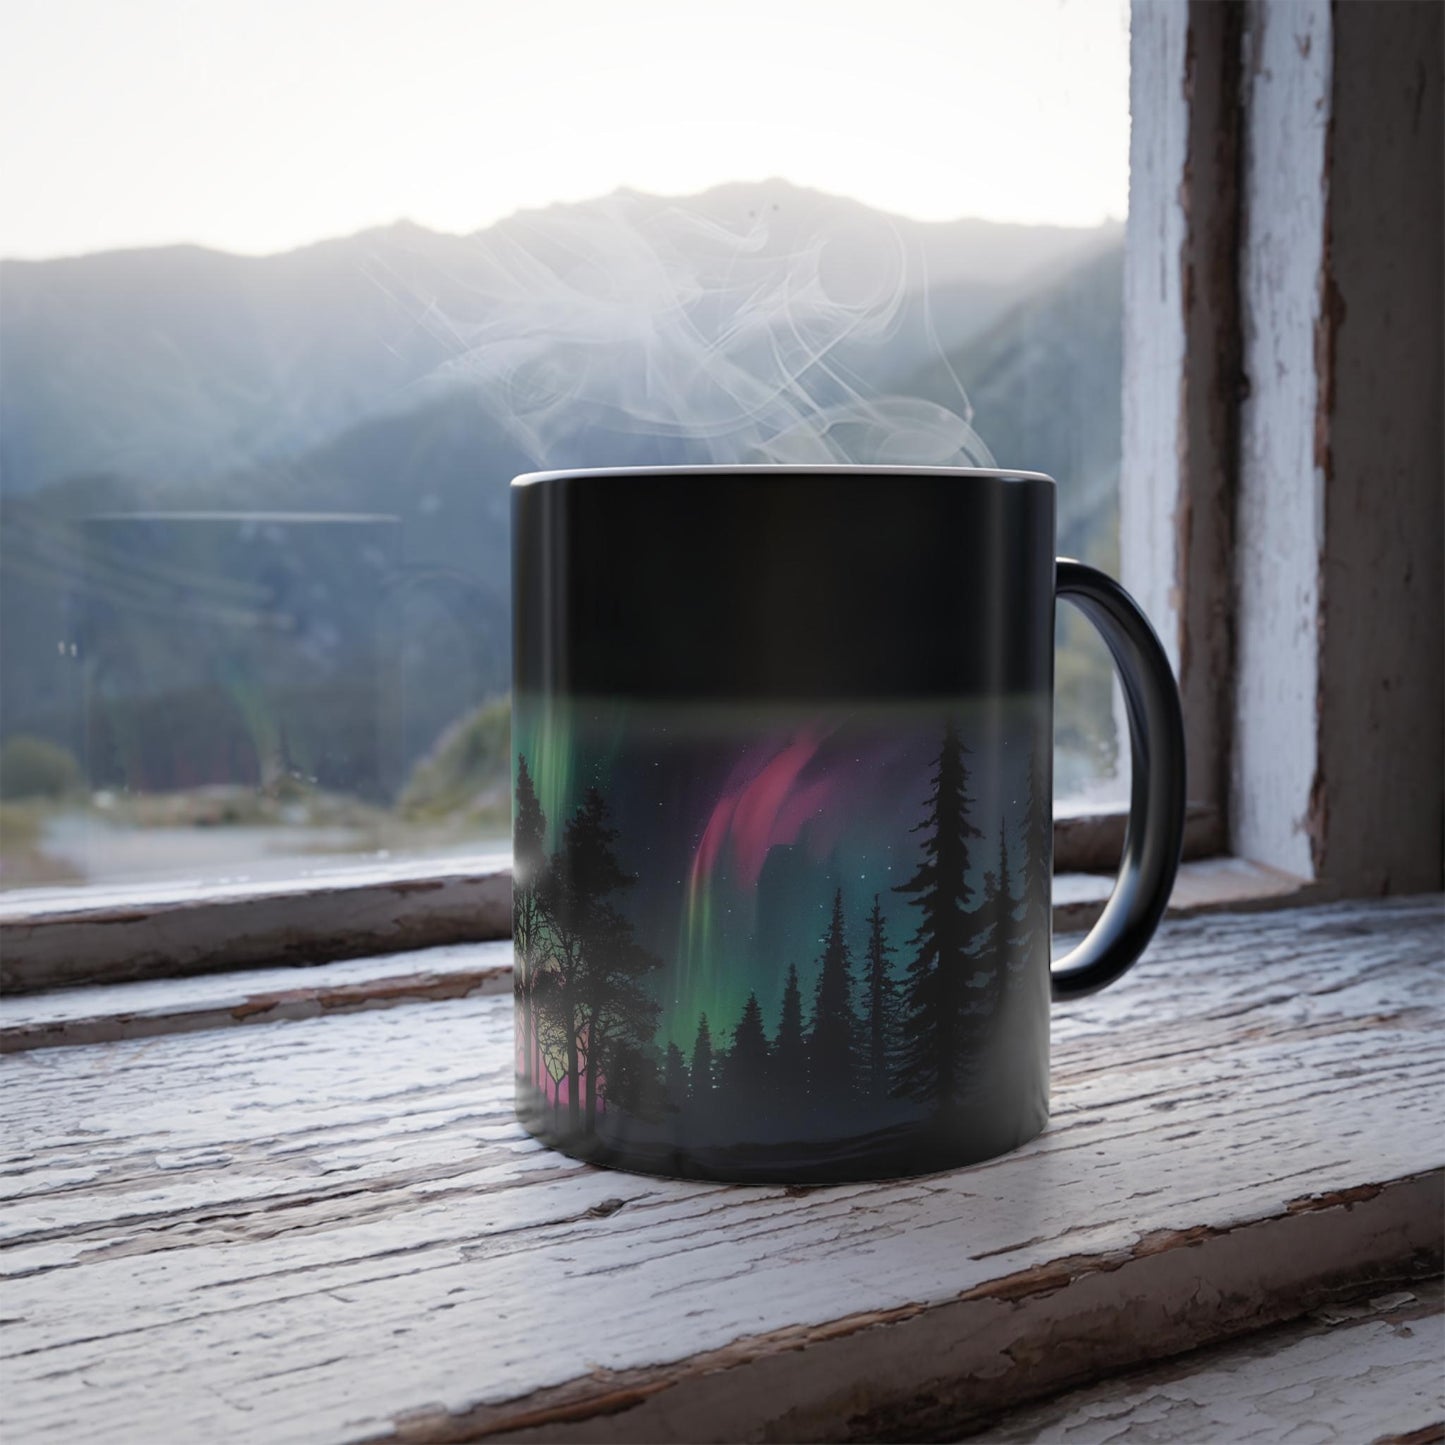 Enchanting Aurora Borealis Heat Sensitive Mug - Northern Lights Magic Color Morphing Mug 11oz - Heat Reactive Night Sky Coffee Cup - Perfect Gift for Nature Lovers 17